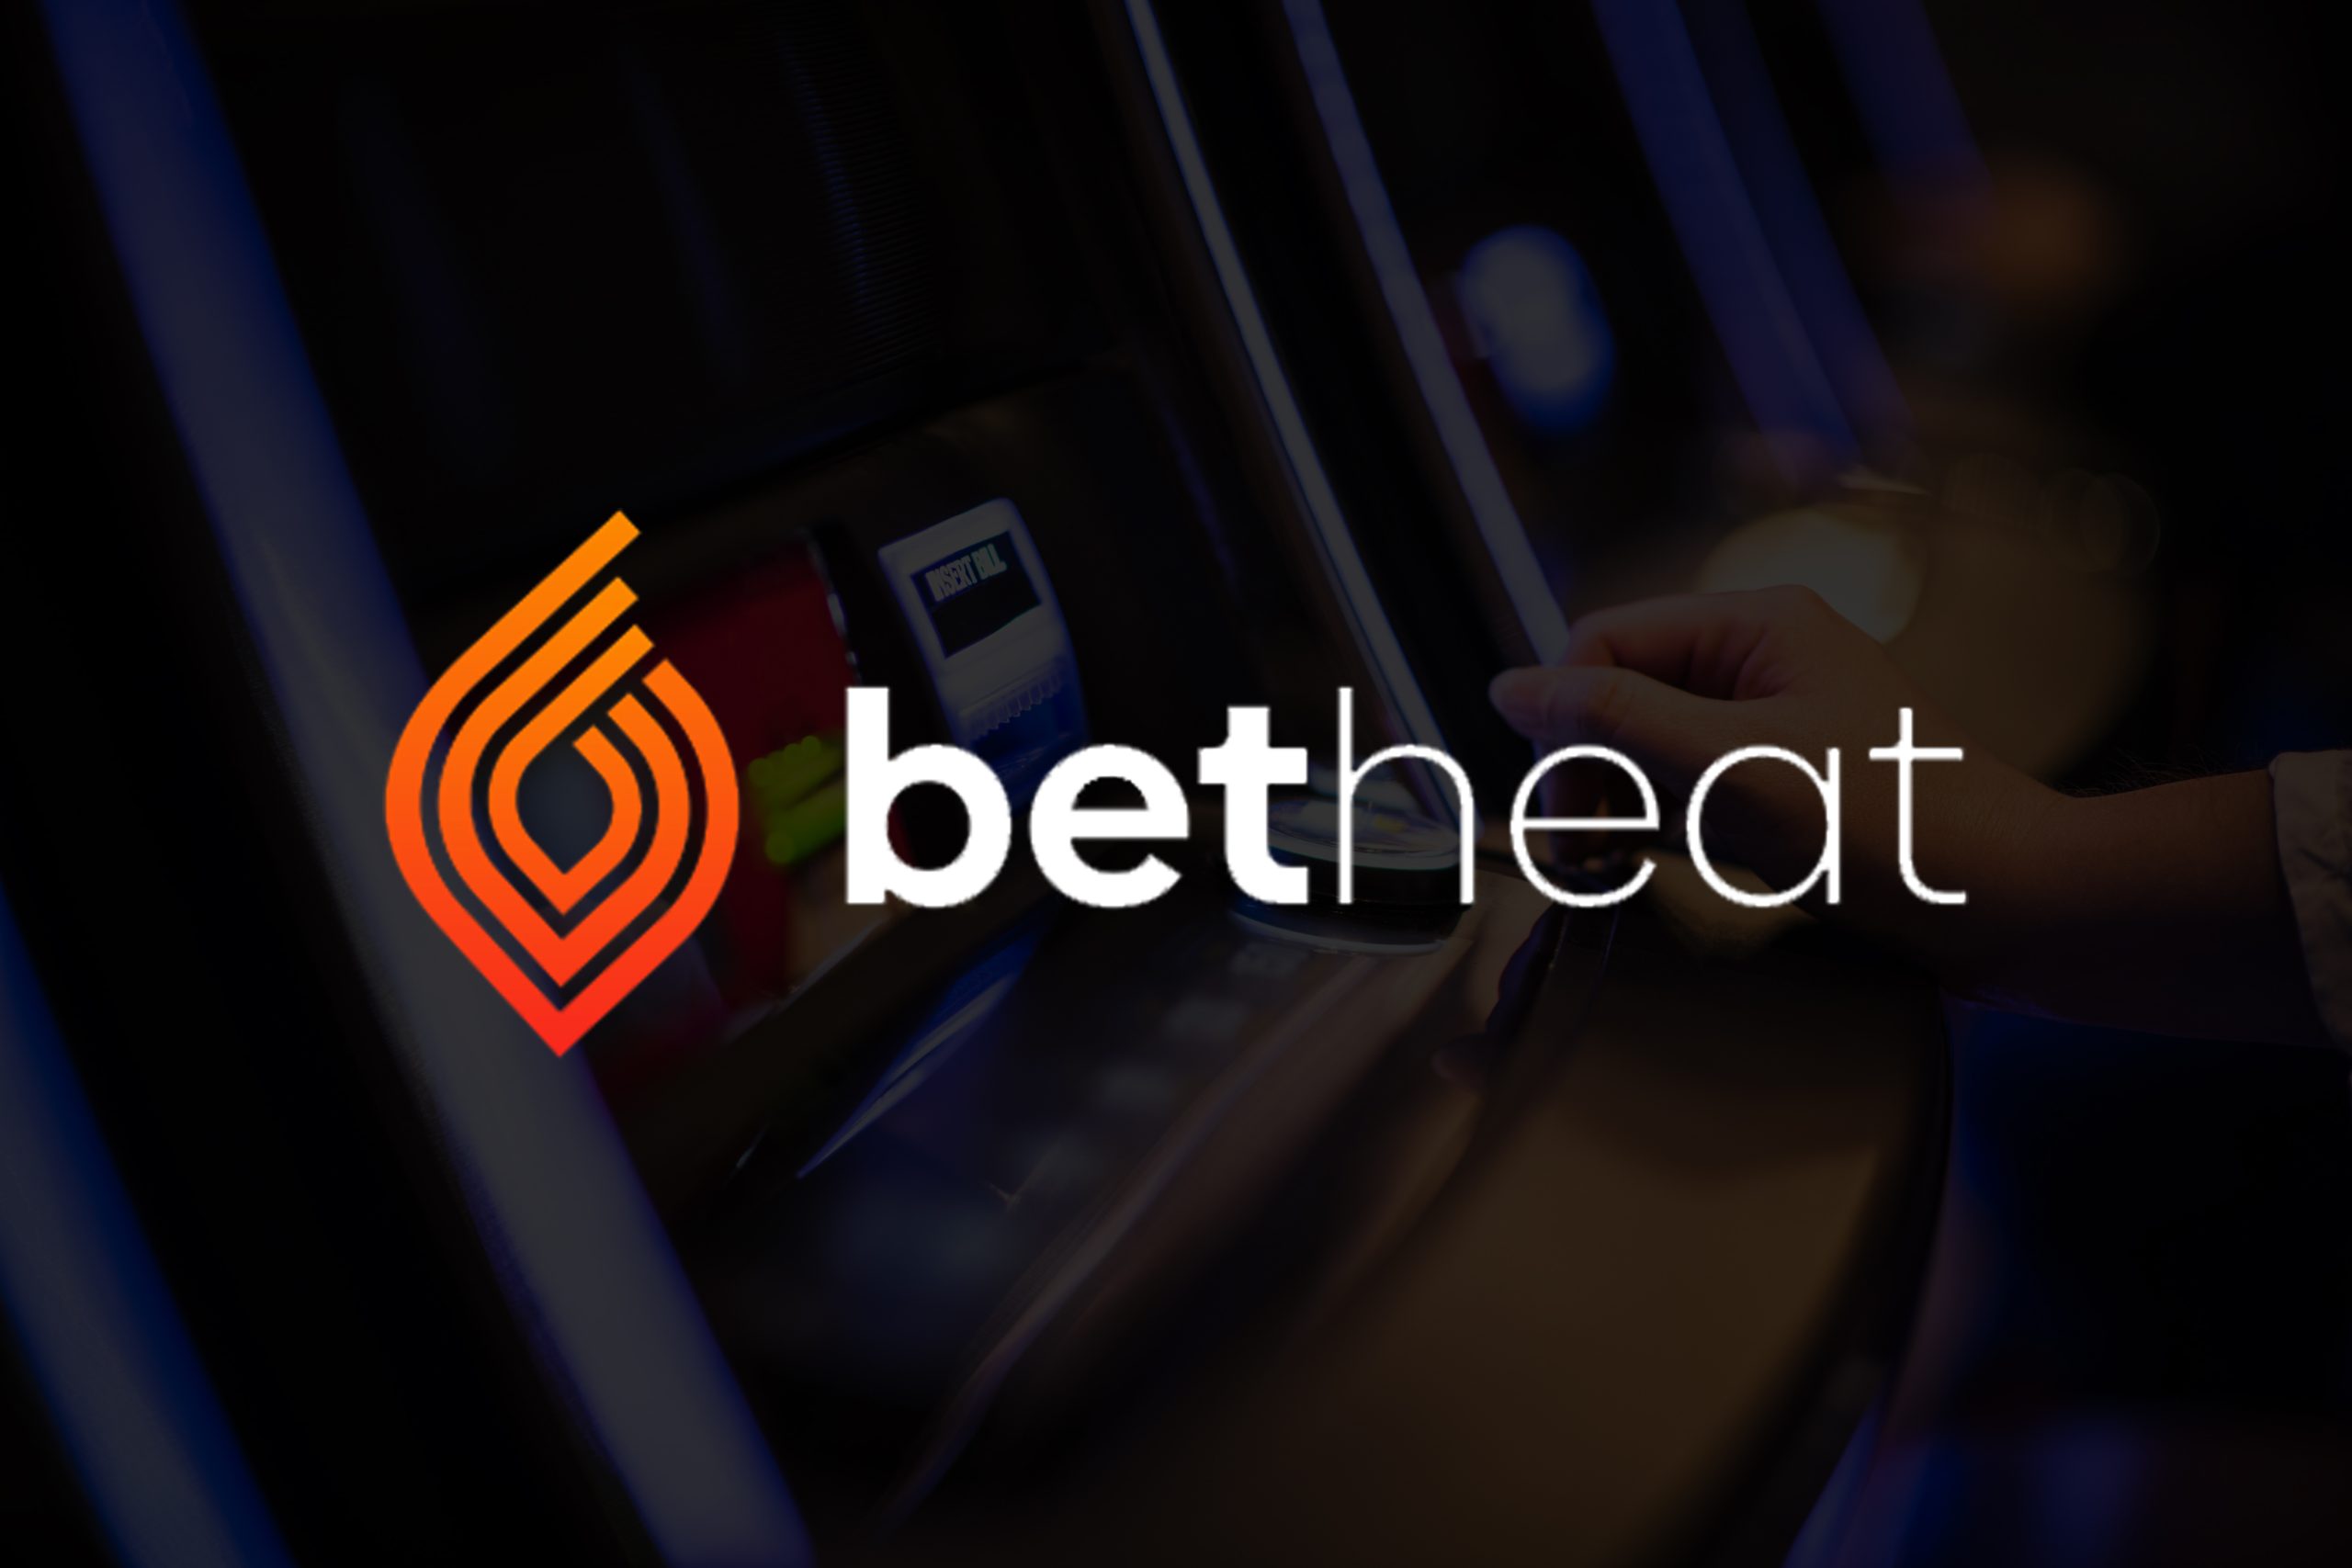 Betheat Casino Review